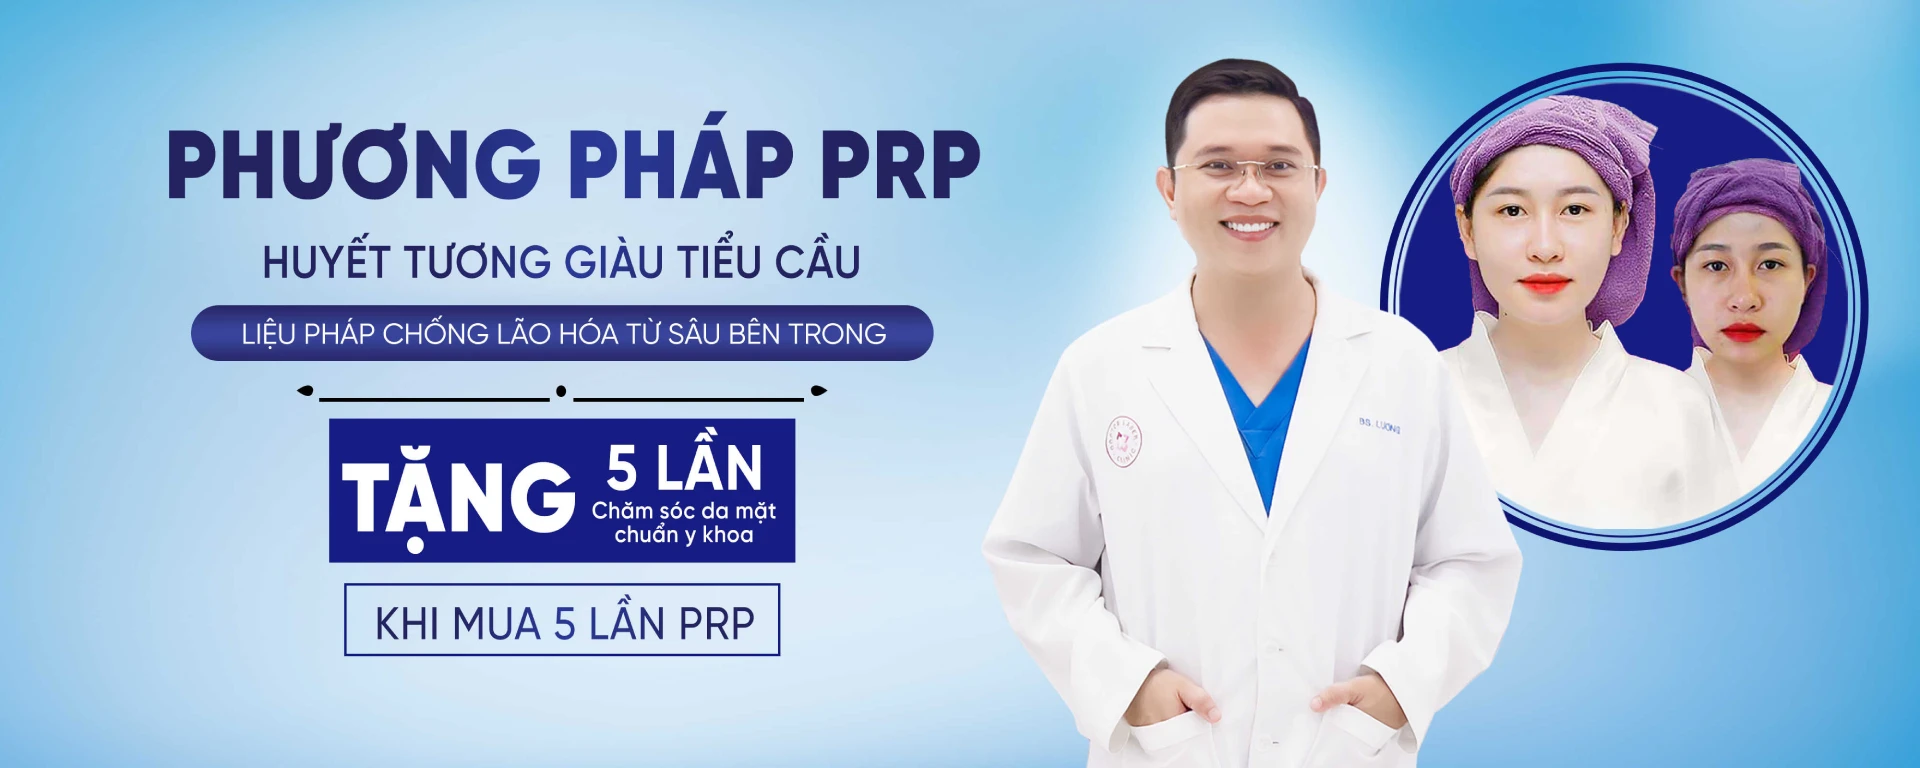 Phương pháp PRP Bác sĩ Lương